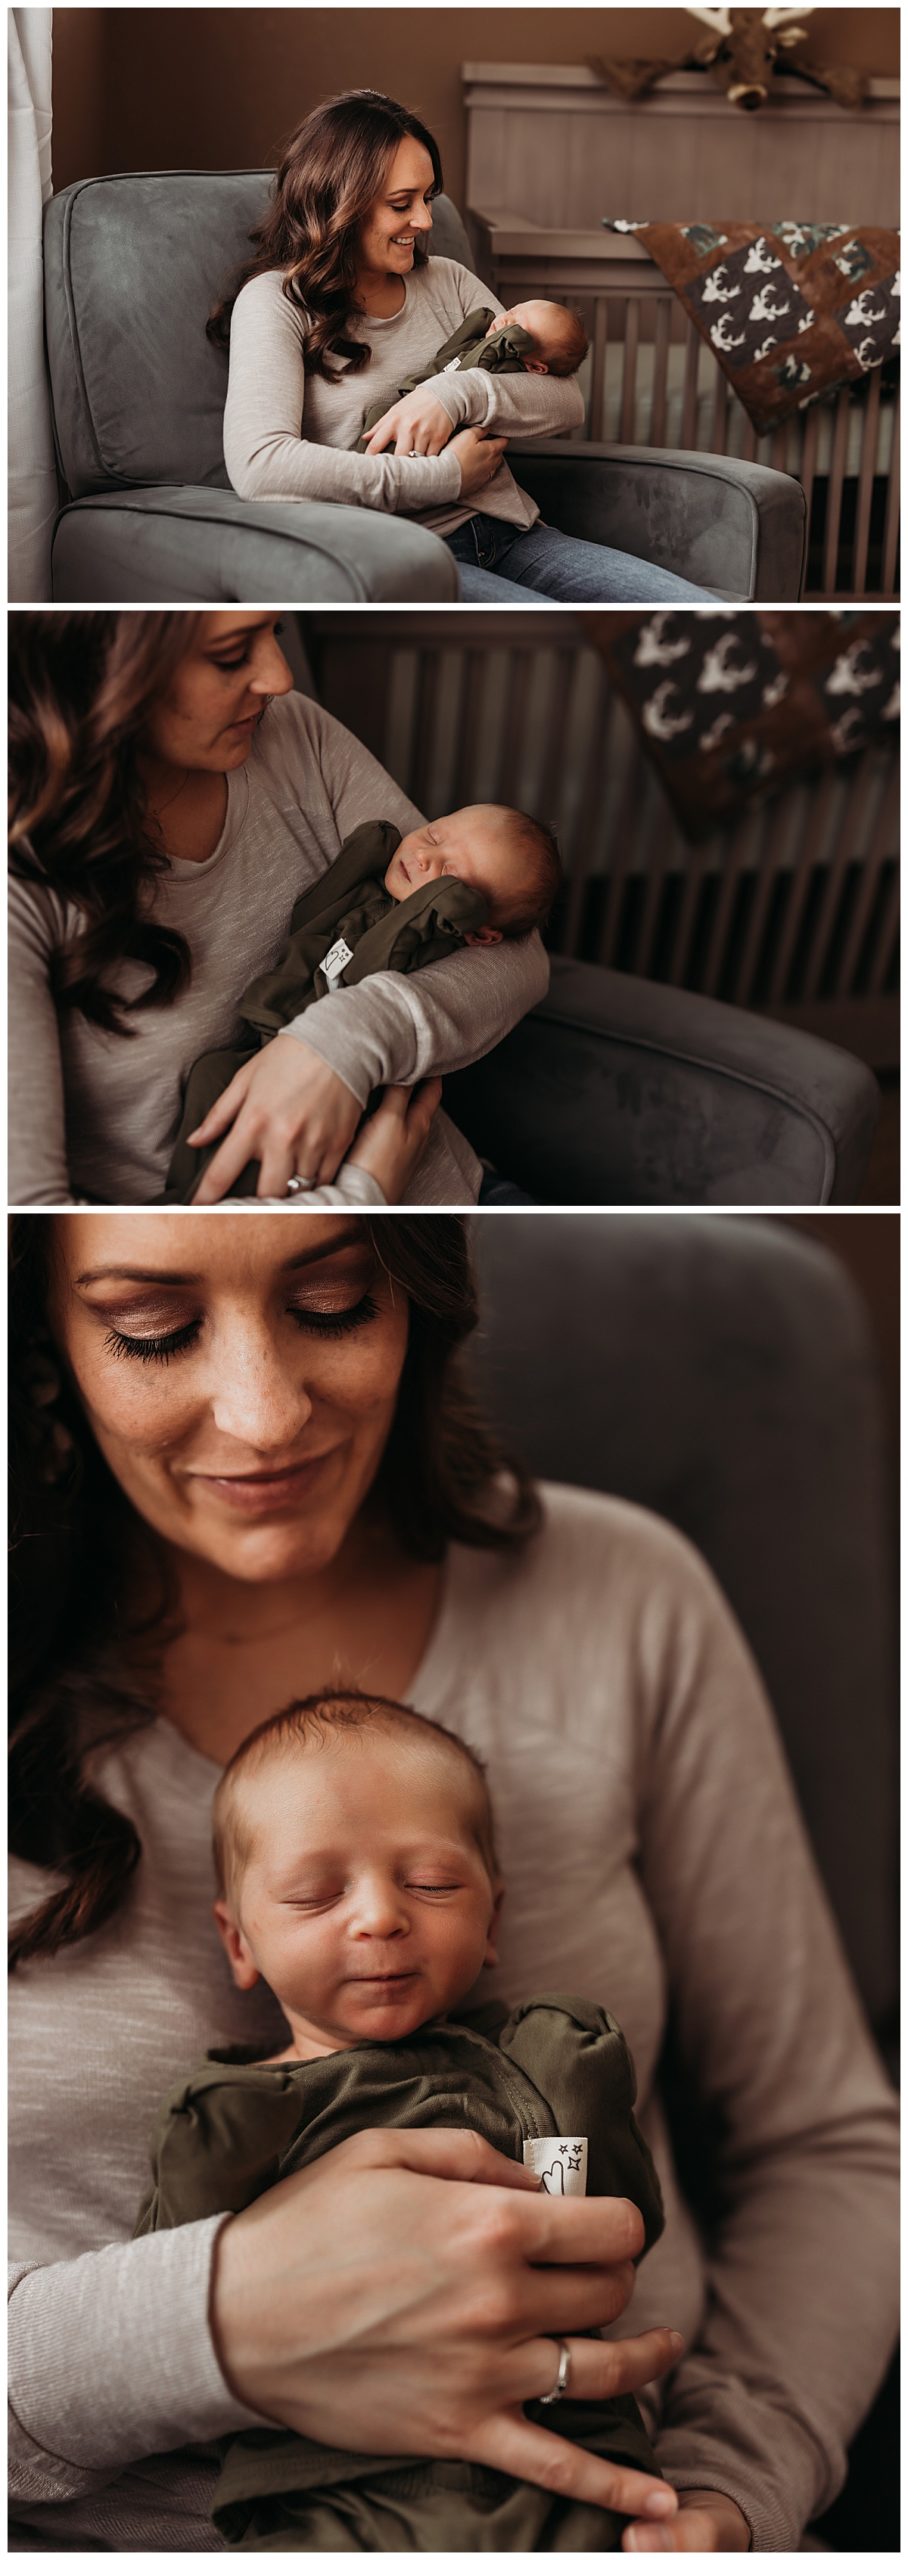 Denver newborn photographer captures mother holding new baby boy